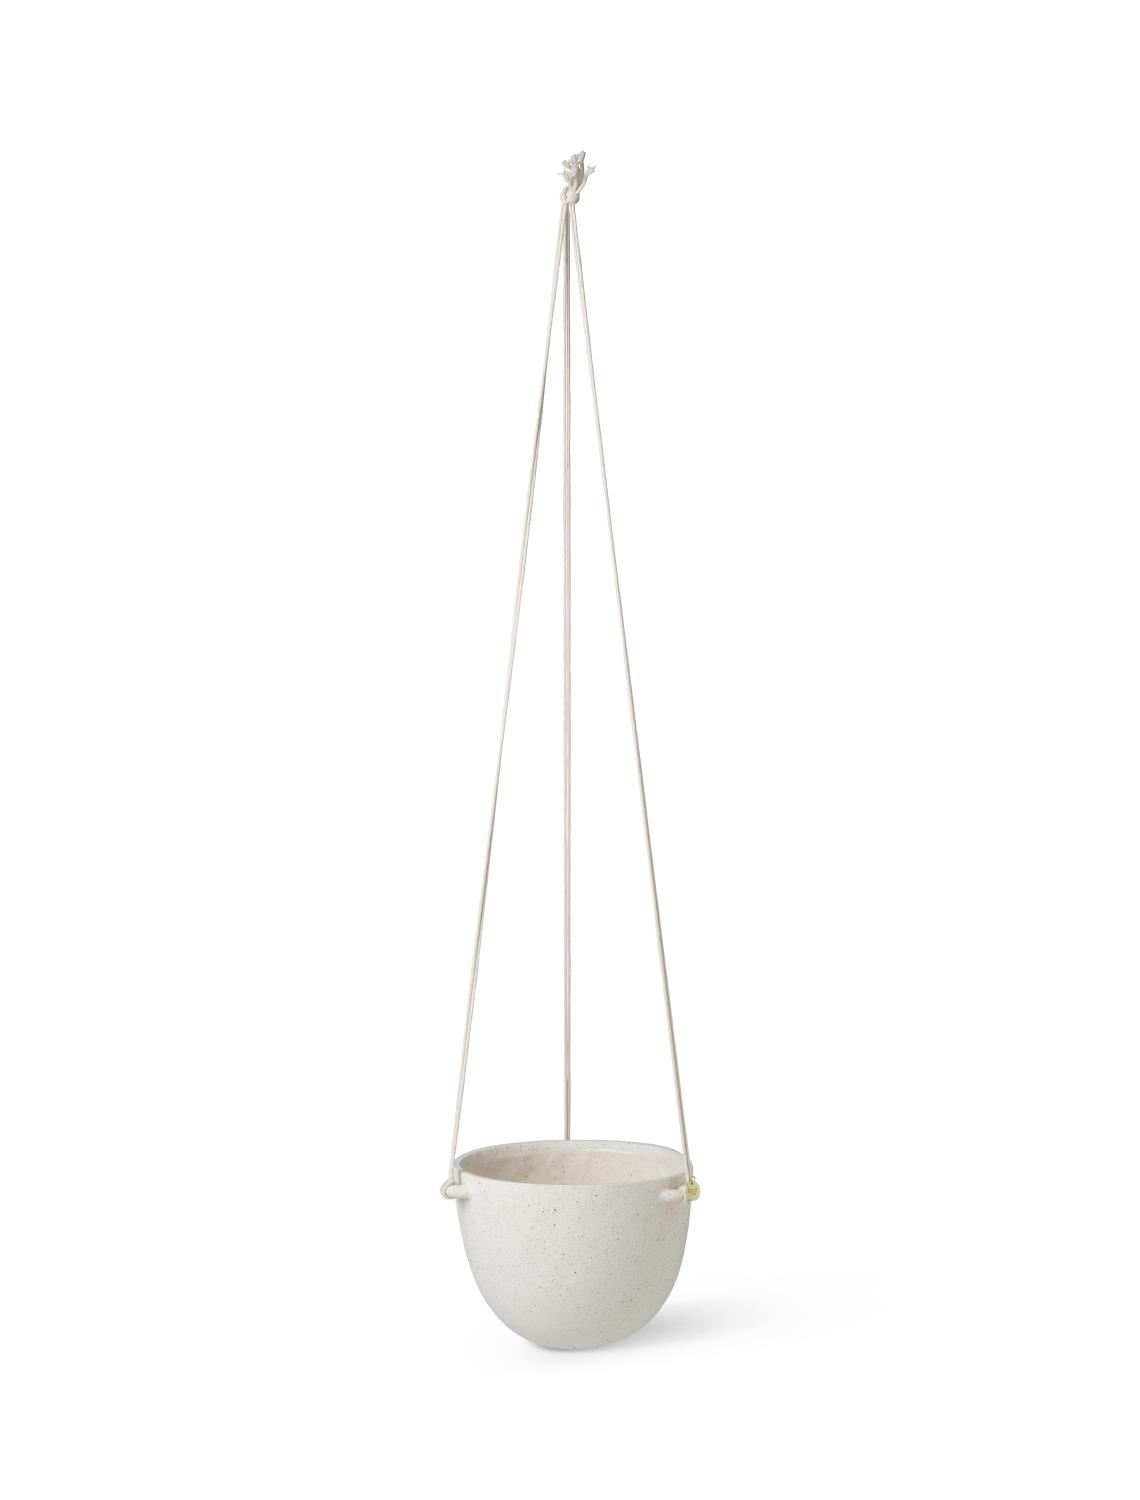 Ferm Living - Speckle Hanging Pot - Off White - Large